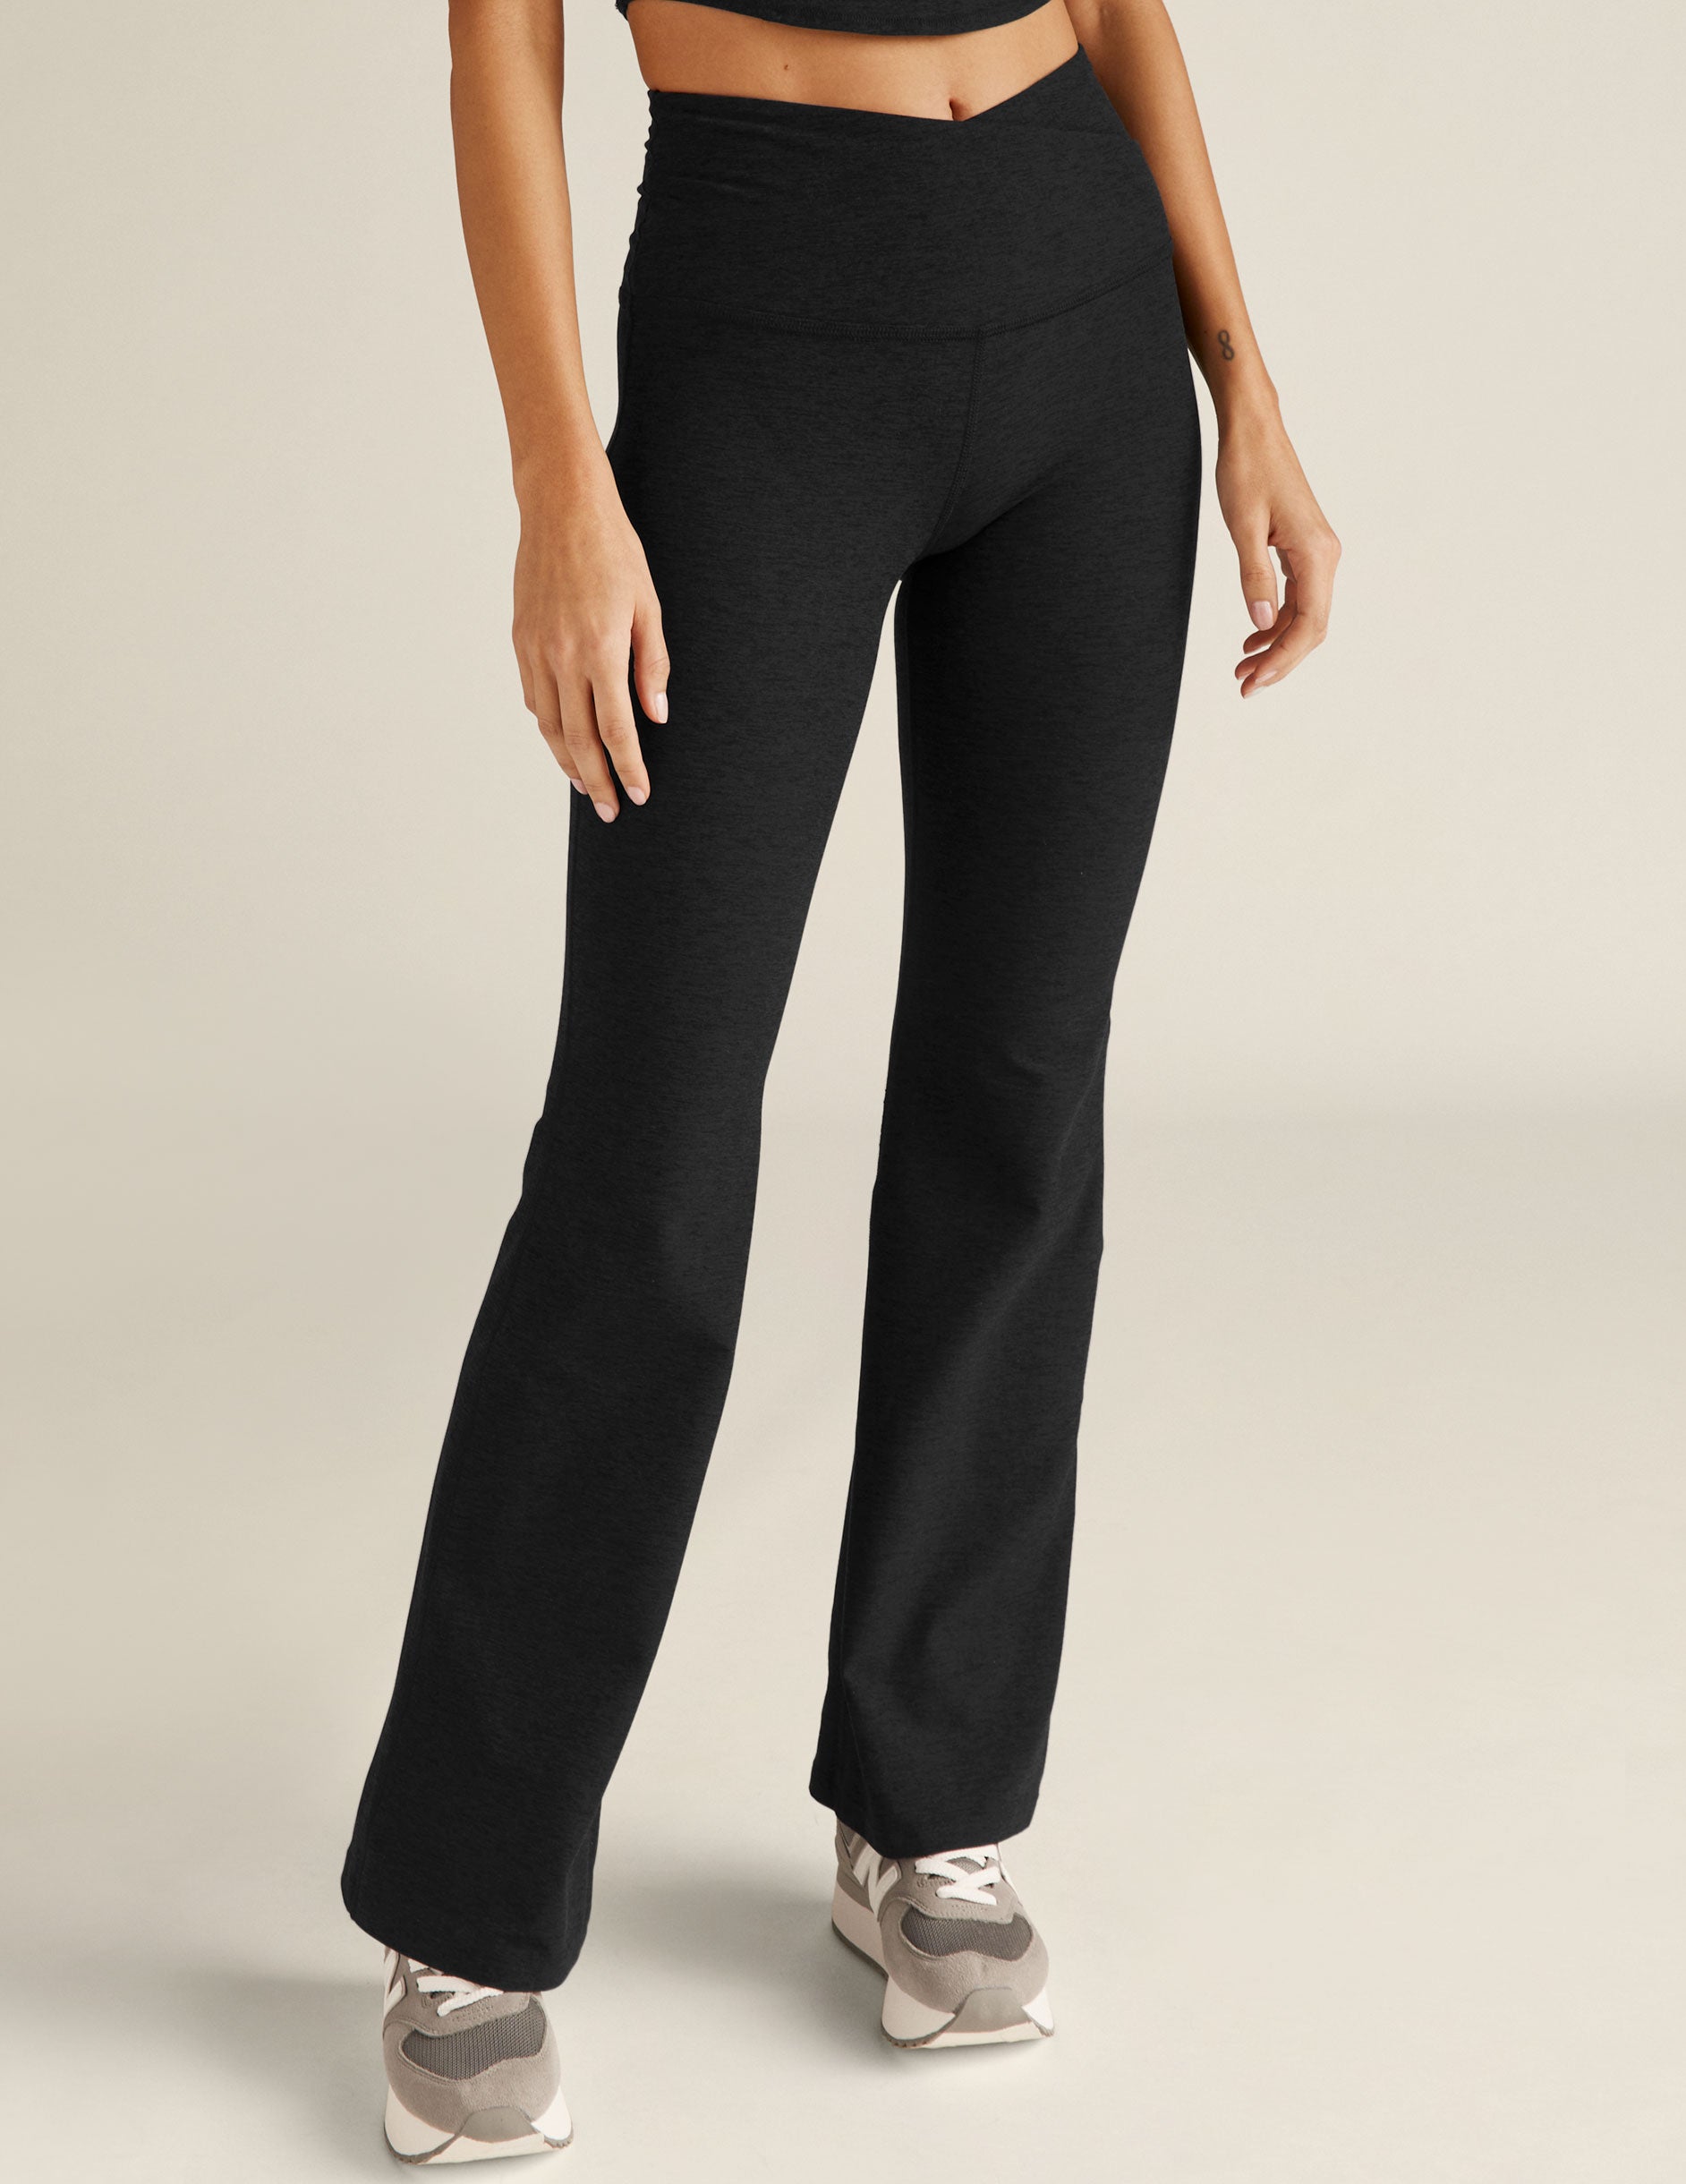 Women's Low-Rise Bootcut Yoga Pants with Pockets Stretch Slim Workout  Pants,Black,XS, Pants -  Canada